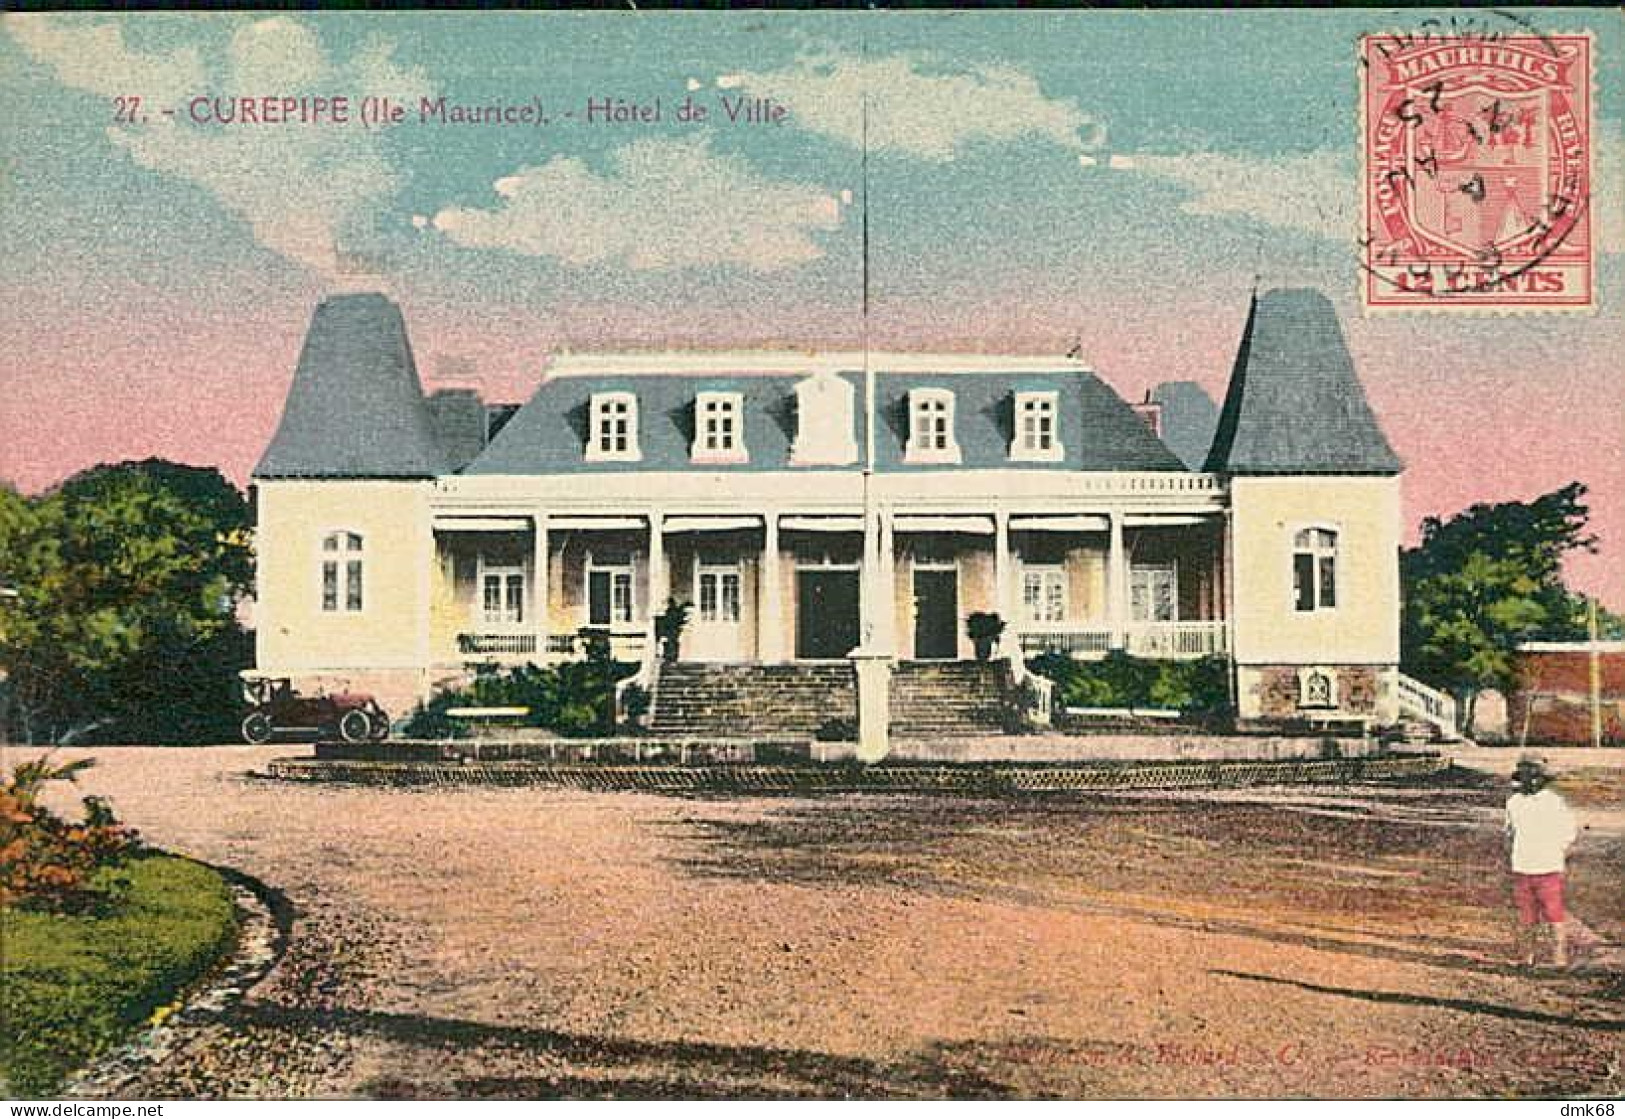 AFRICA - MAURITIUS / ILE MAURICE - CUREPIPE - HOTEL DE VILLE PHO. L'ABEILLE - MAILED 1925 / STAMP (12573) - Mauritius